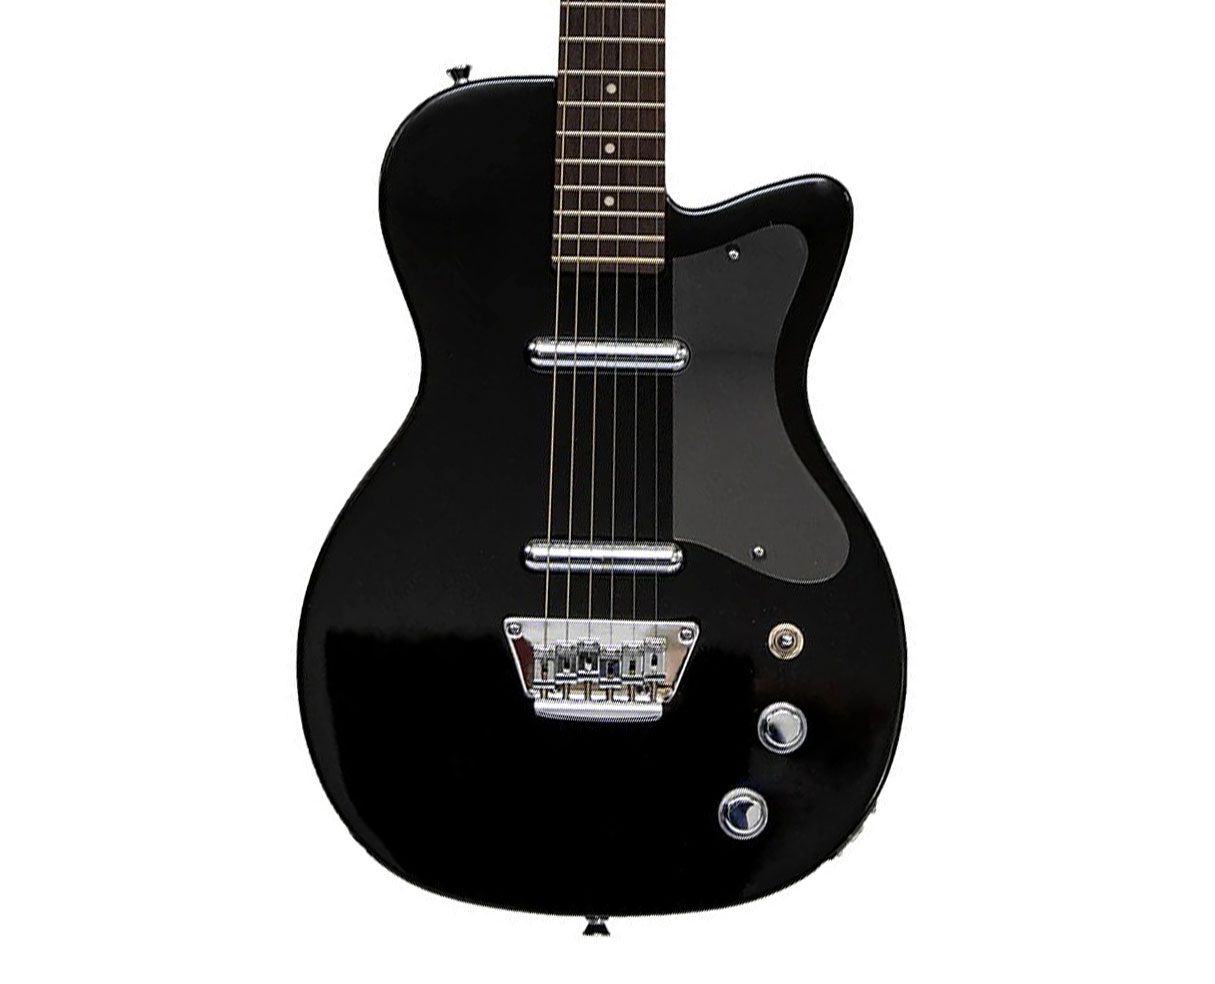 Silvertone 1303 Series Single Cut Guitar - Black - Open Box $199